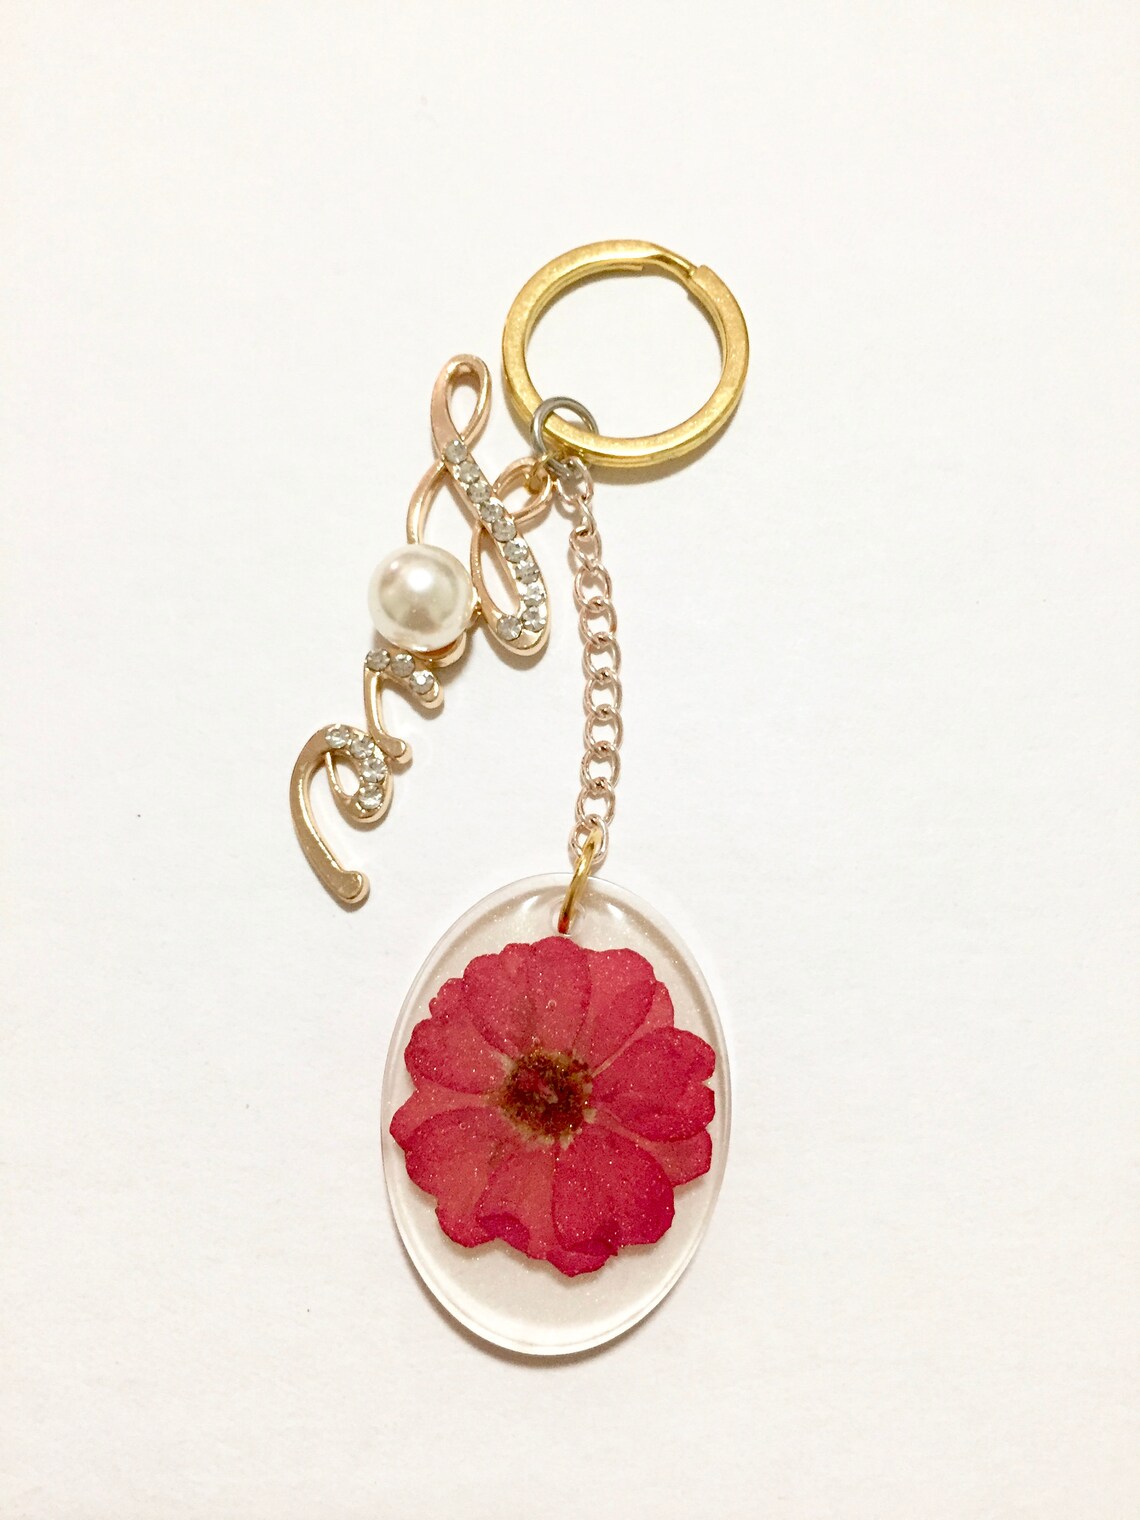 Pressed flowers key chain real flower keychain key ring | Etsy